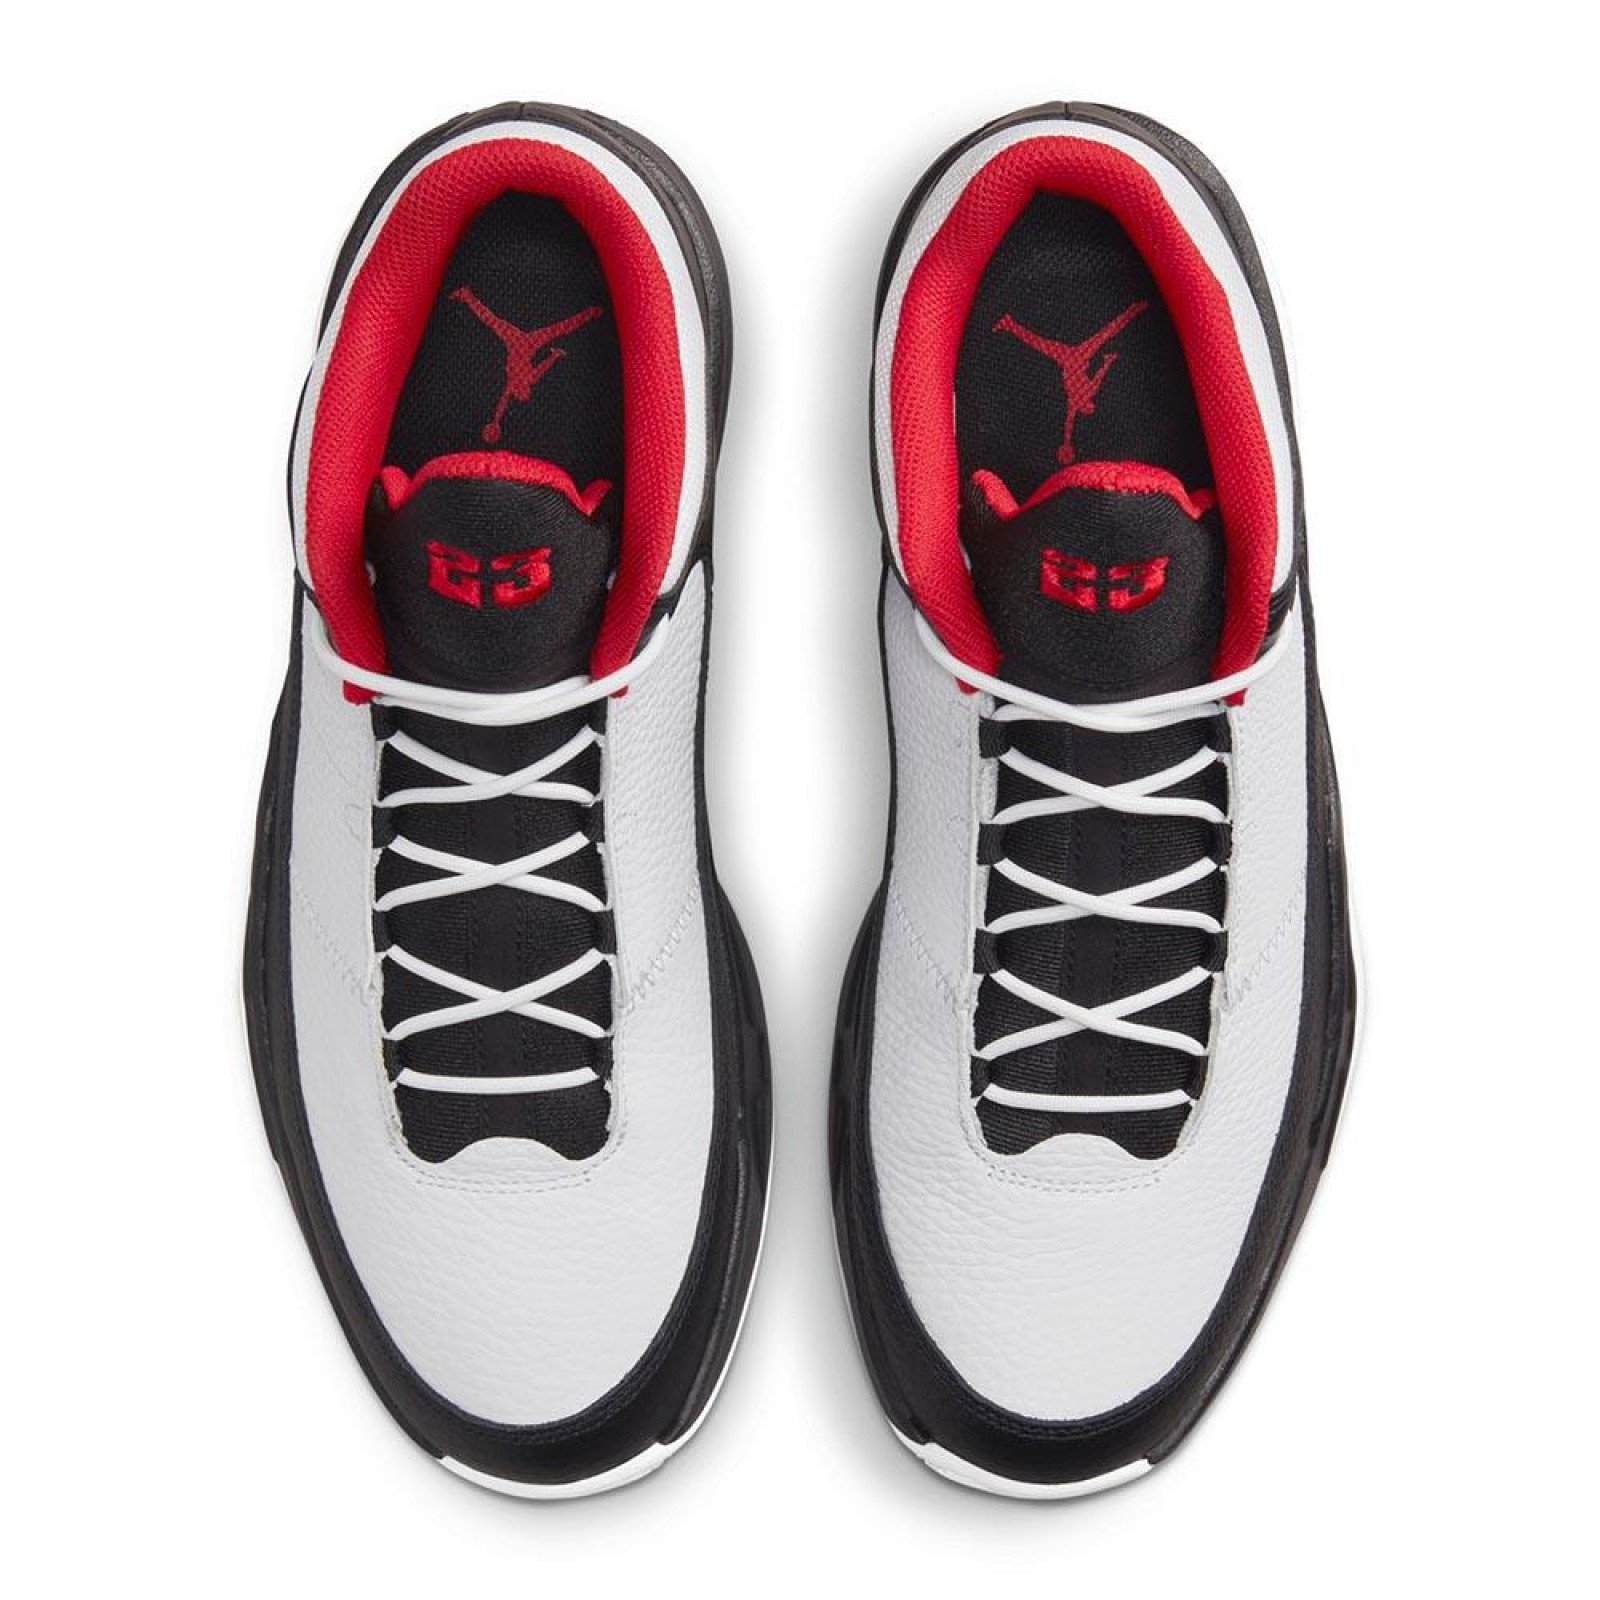 Nike Jordan Max Aura 3 M